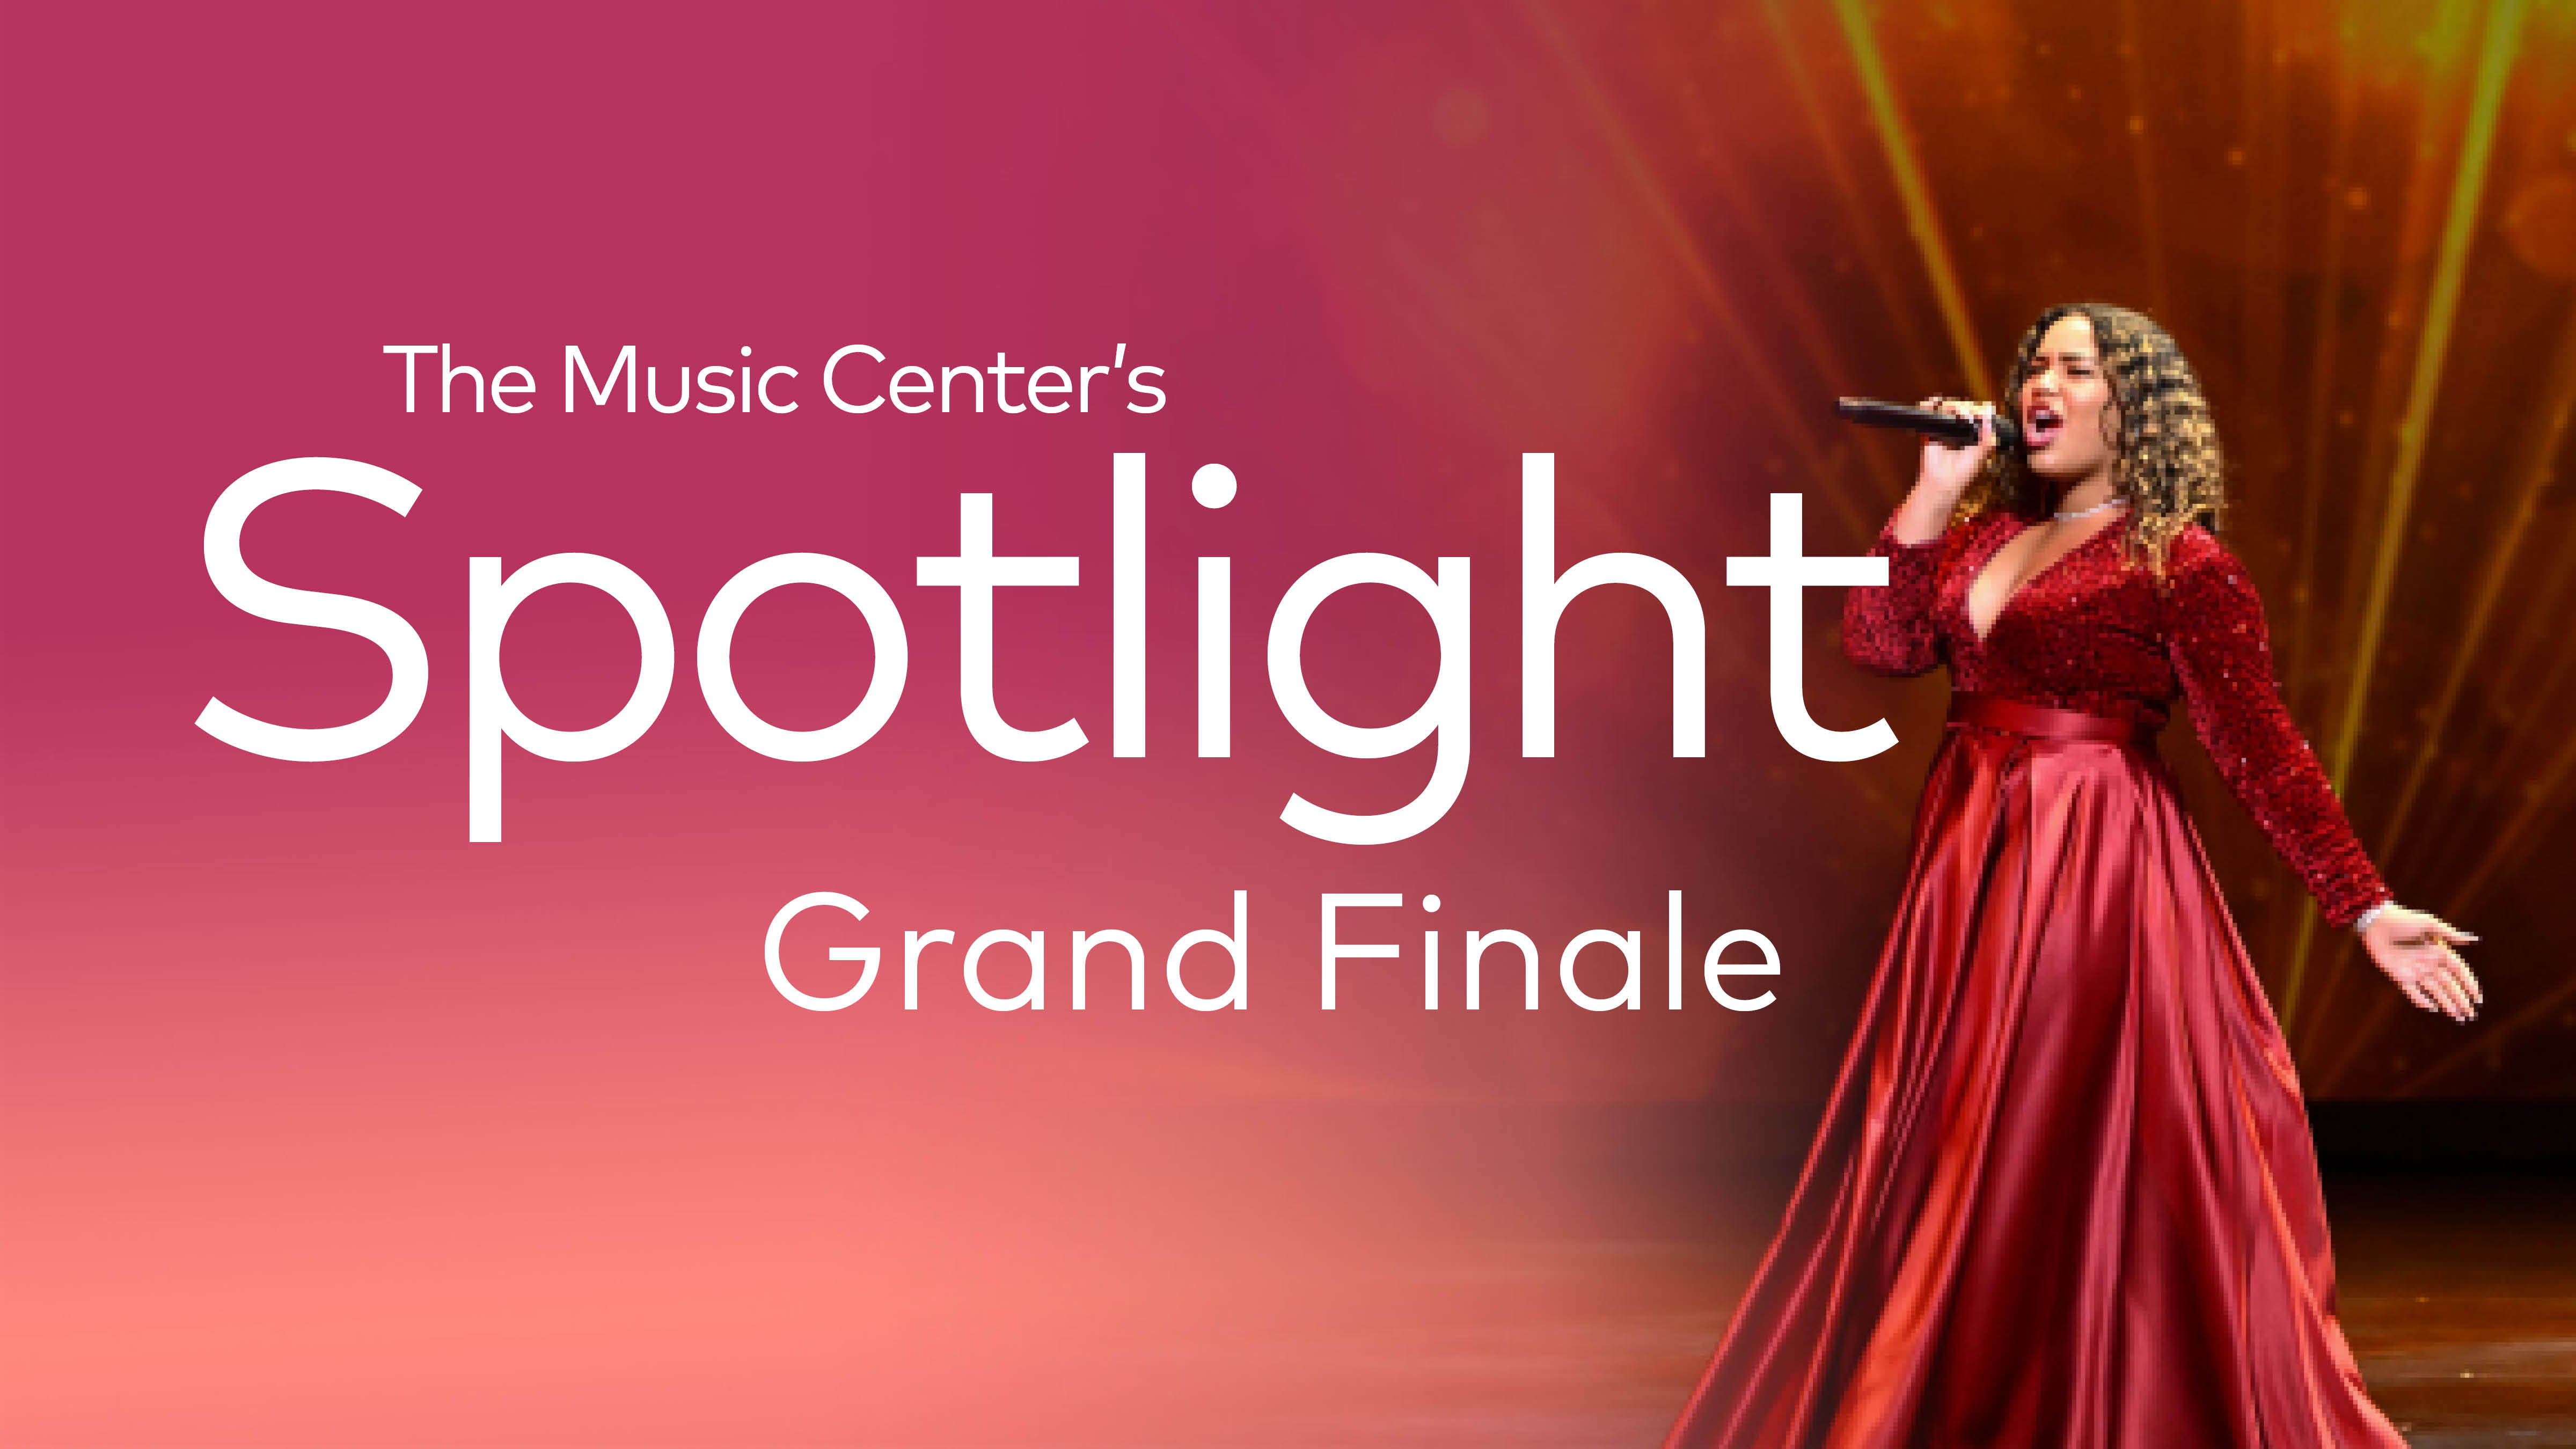 The Music Center's Spotlight Grand Finale